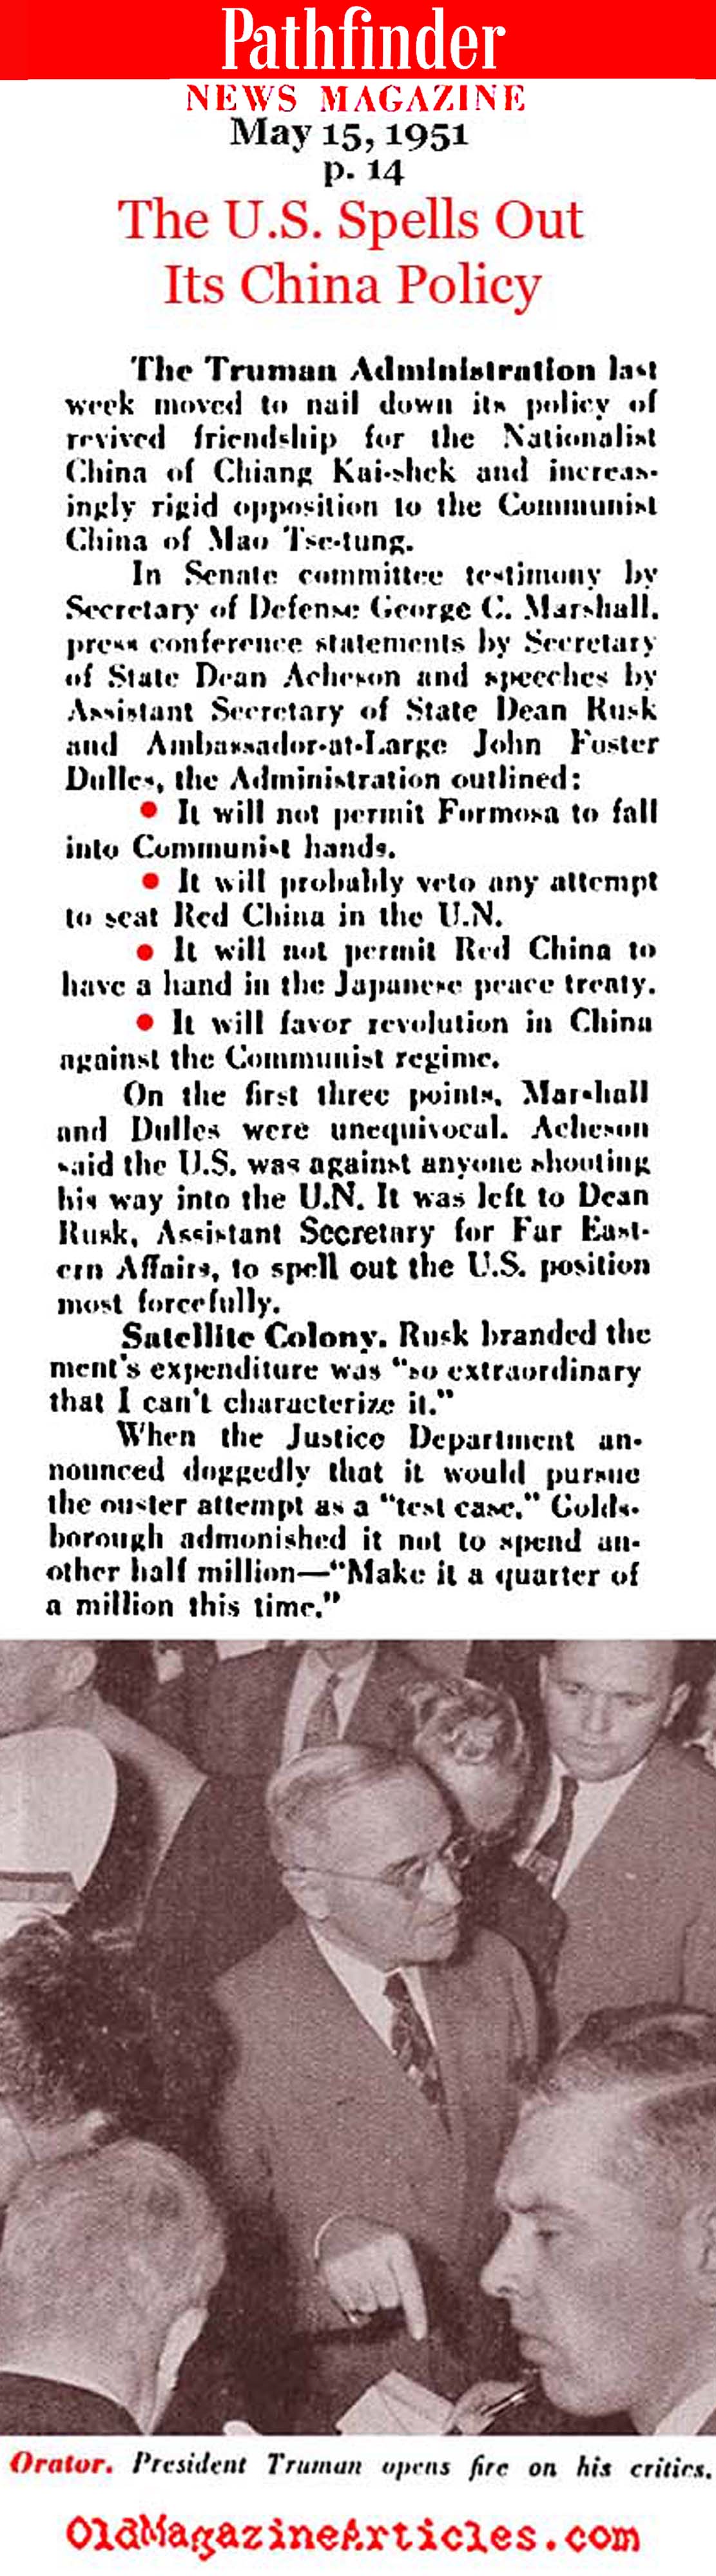 Truman's China Policy for 1951 (Pathfinder Magazine, 1951)